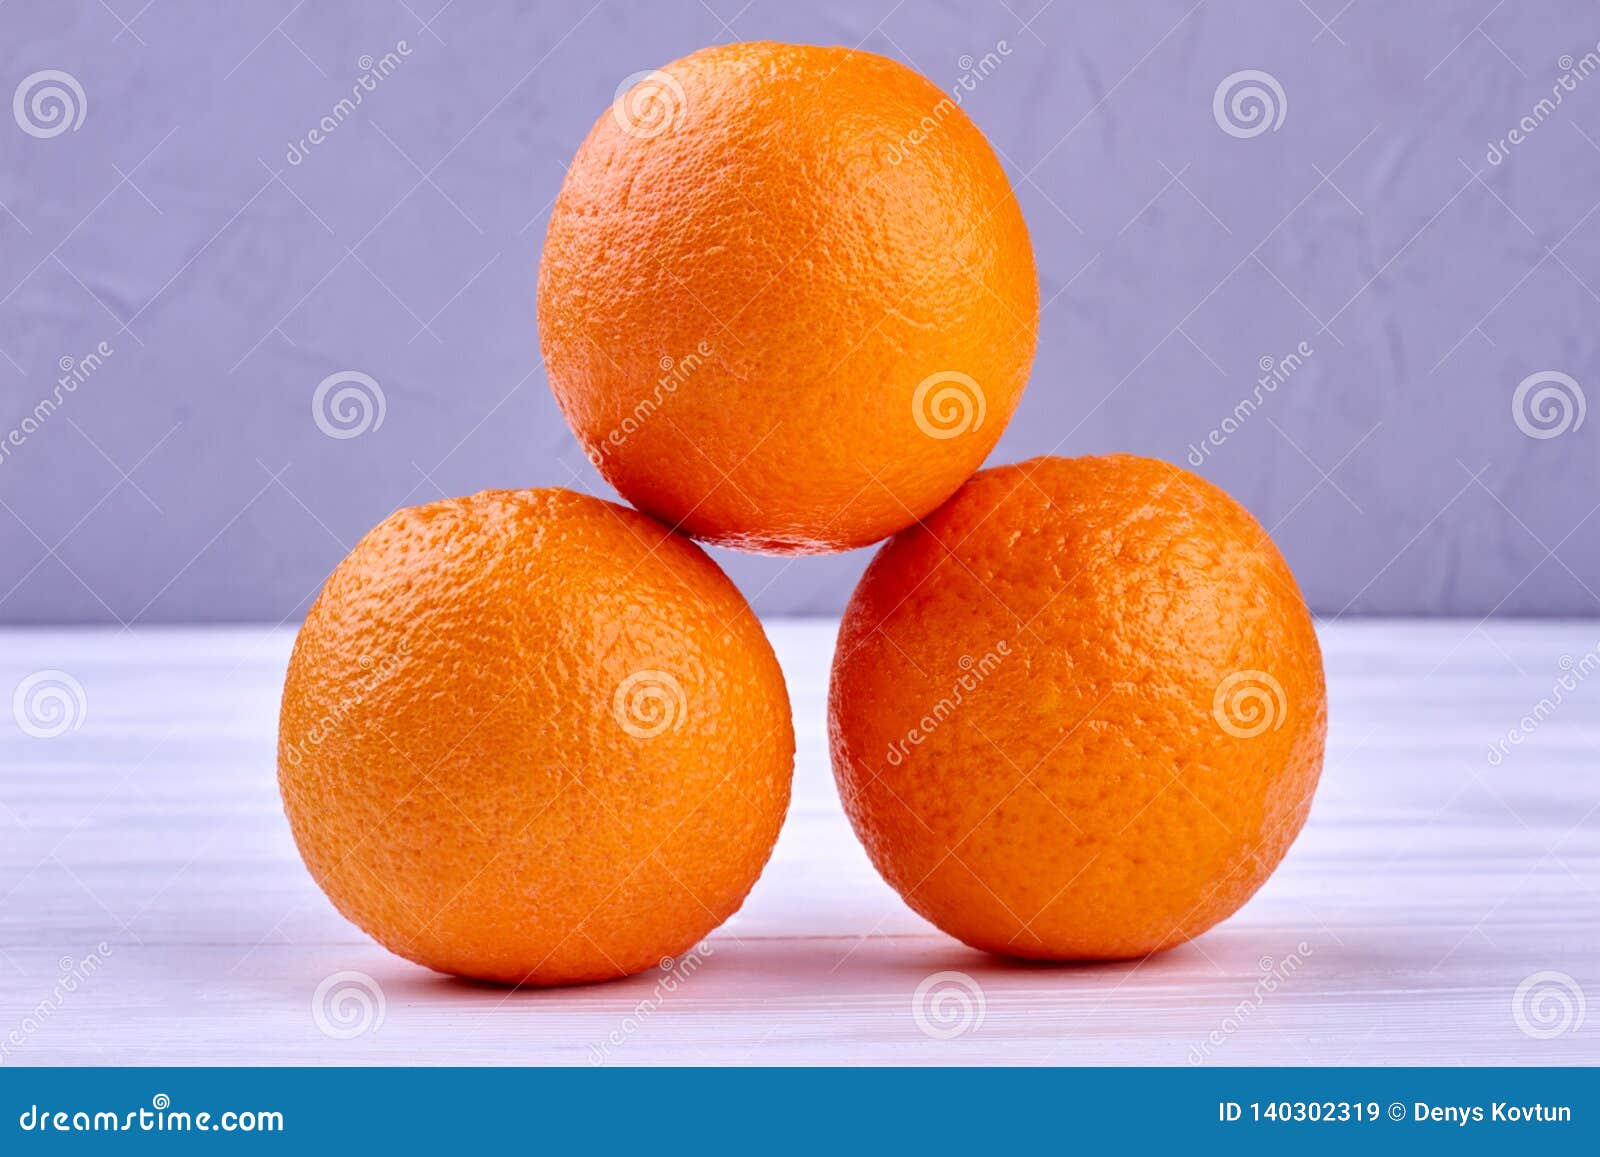 Three Whole Orange Fruits Stock Image Image Of Dietary 140302319